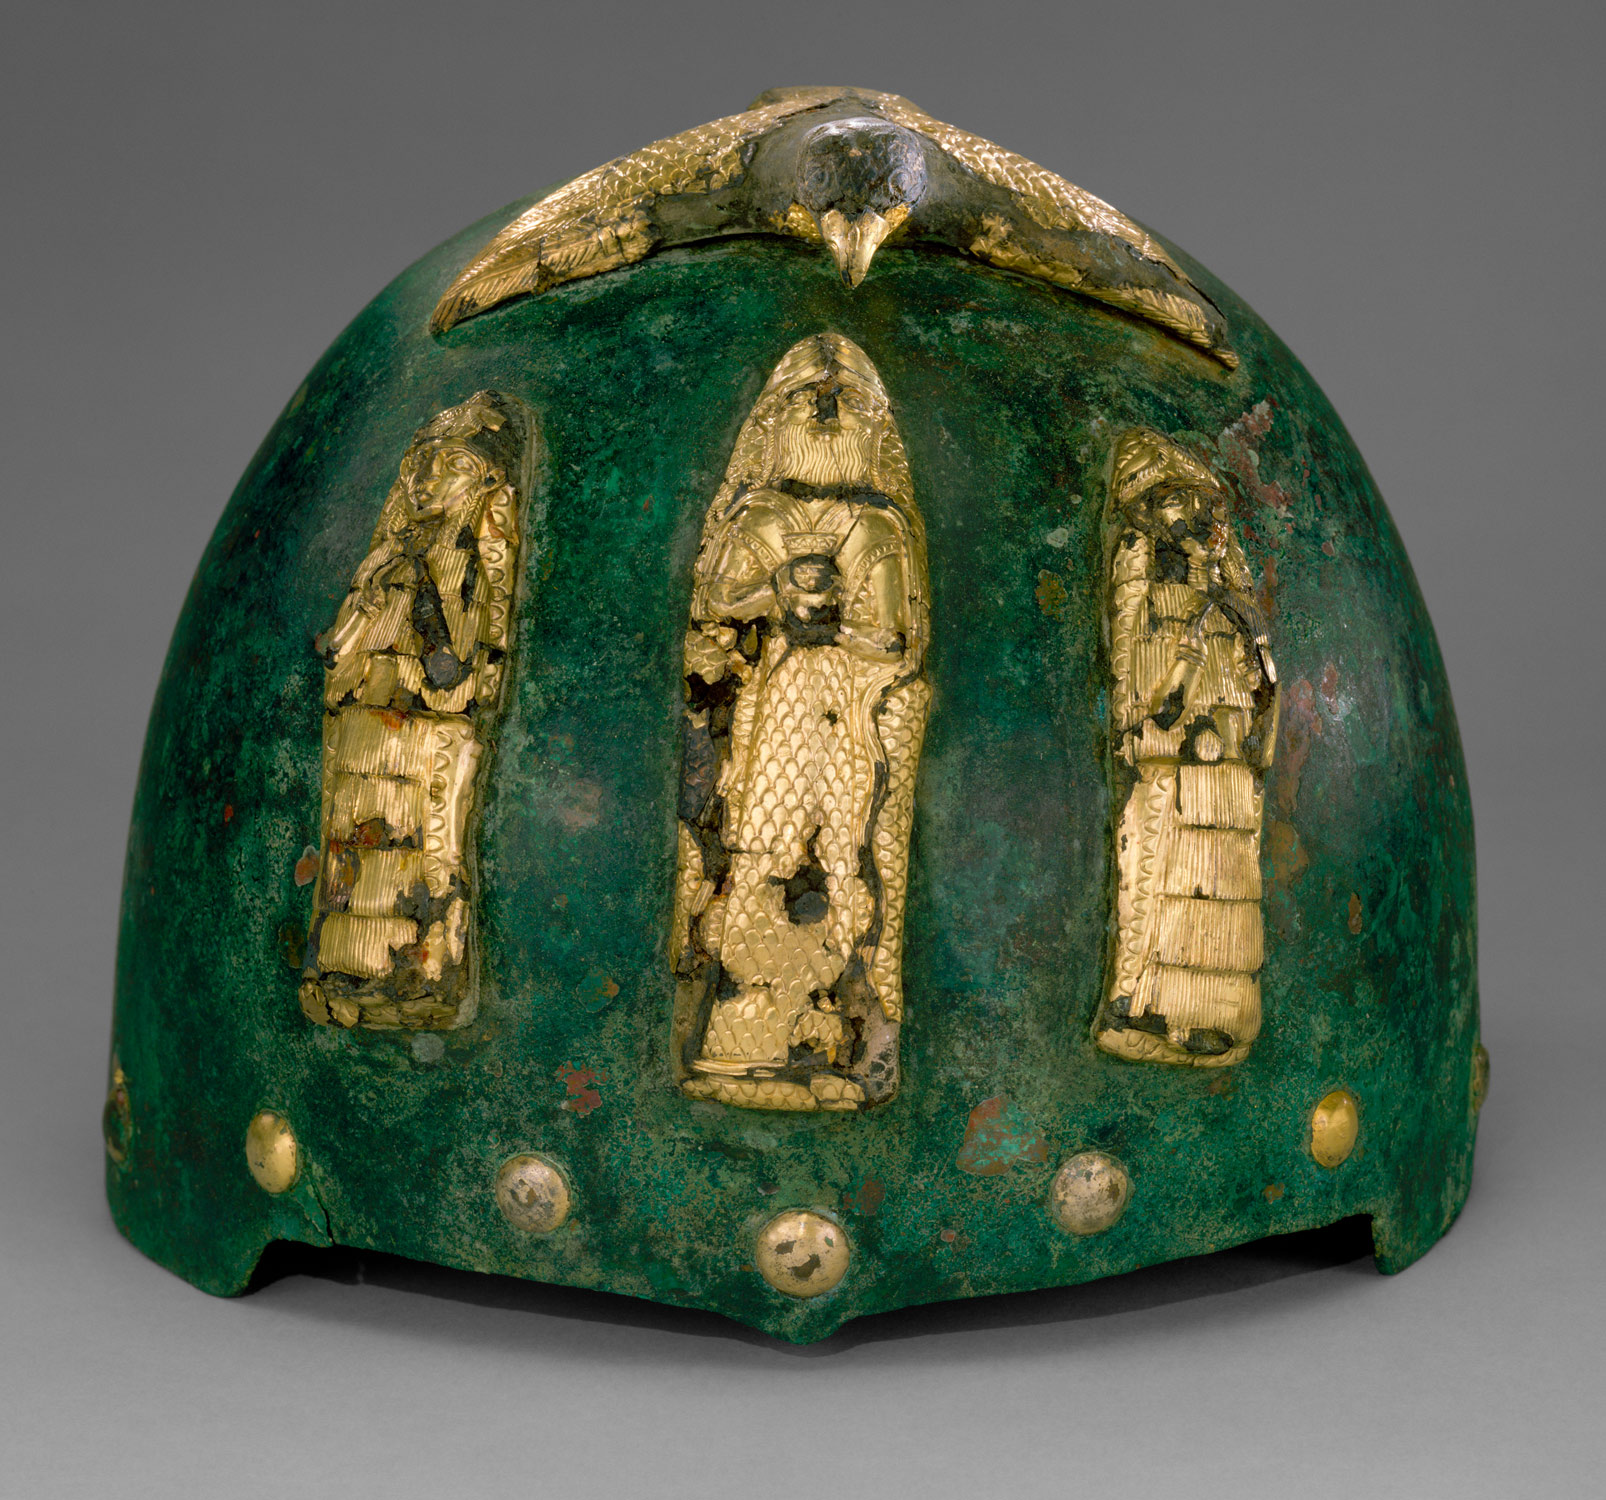 00 - helmet artifact of Ur; Nibiru winged disc & aliens